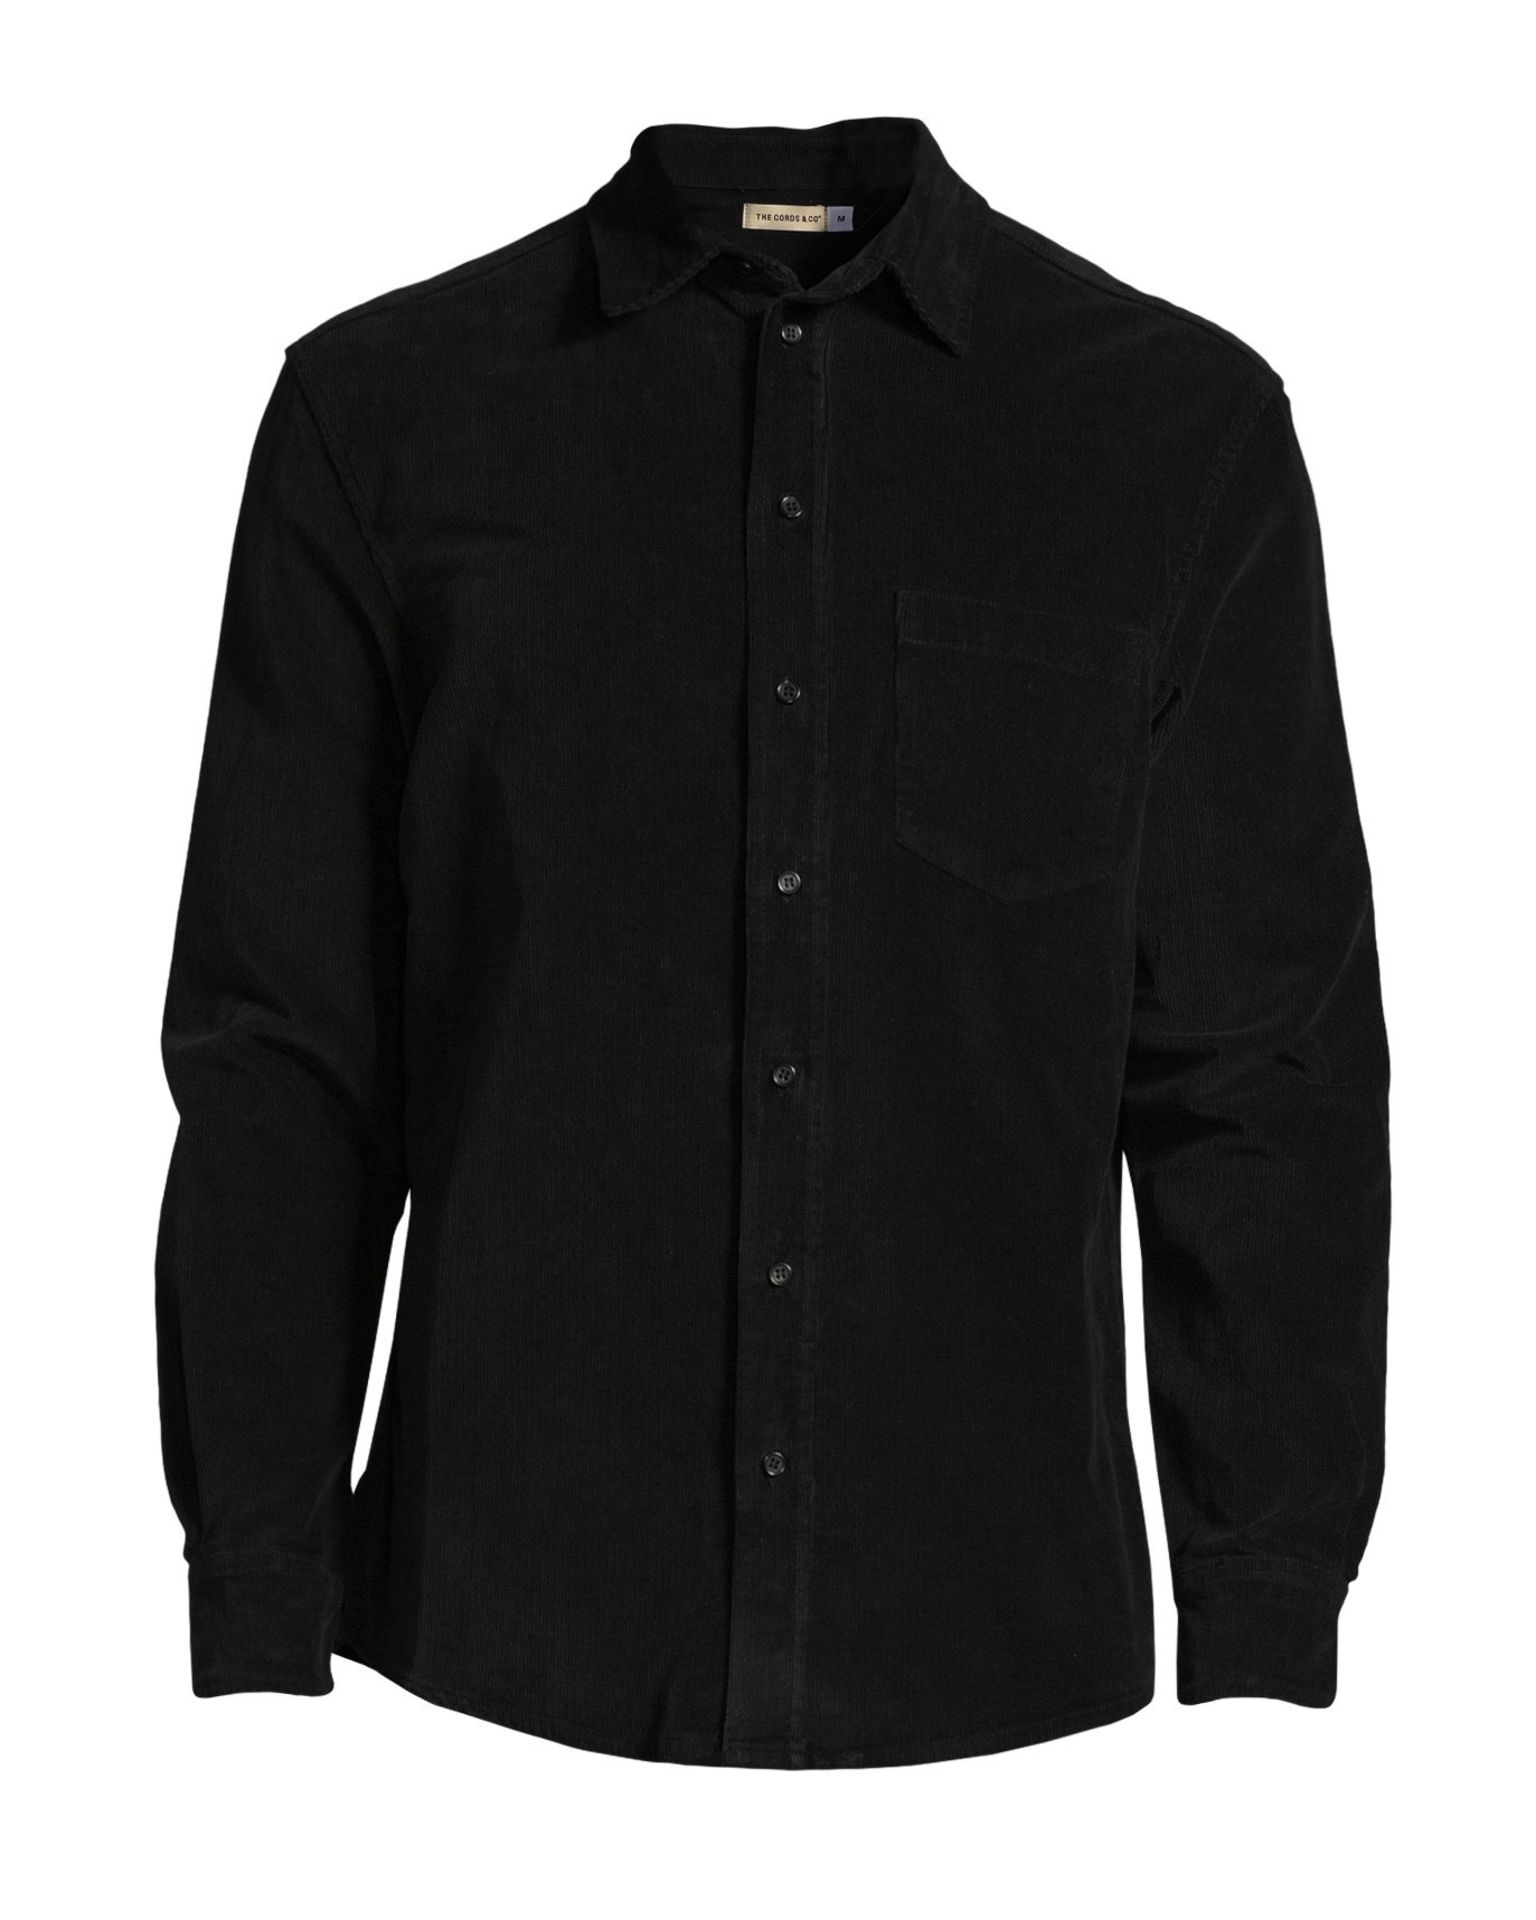 The Cords & Co. "Odd" Style, Uni-Sex Collard Long Sleeve Shirt(Black) Small, Medium, Large, X-Large - Image 2 of 6